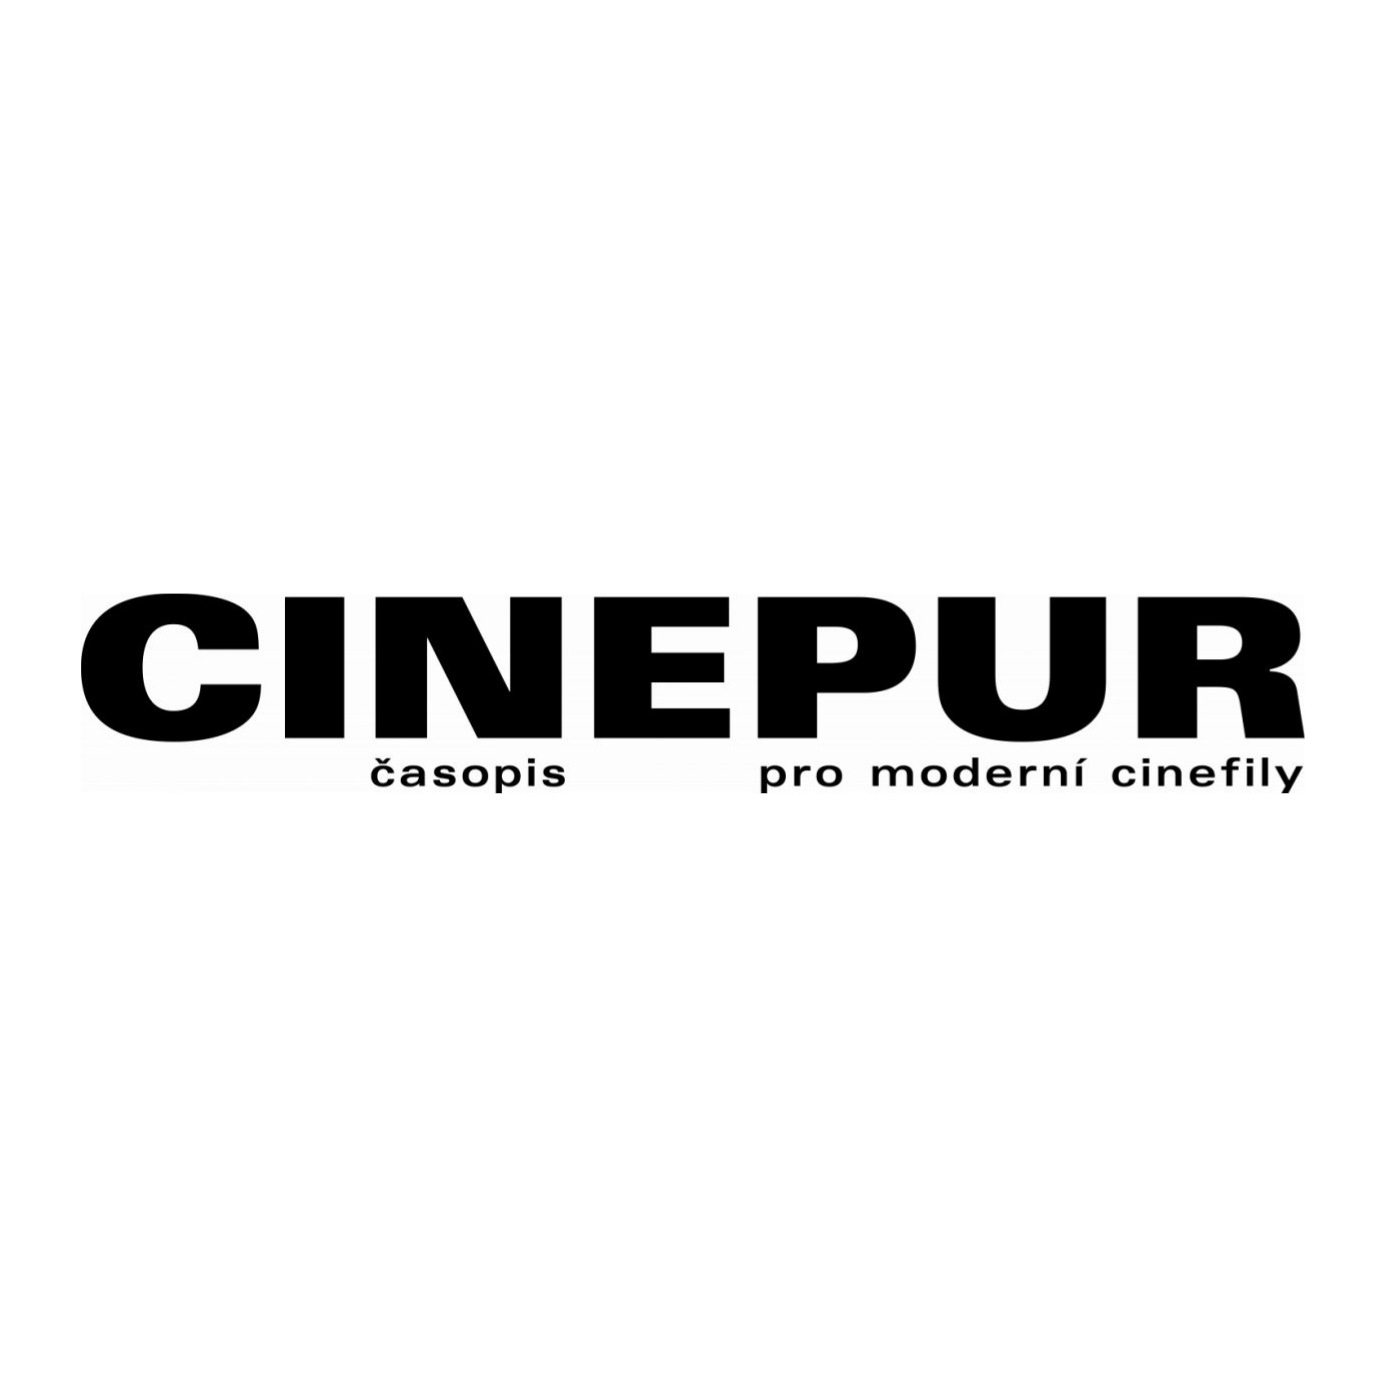 Cinepur